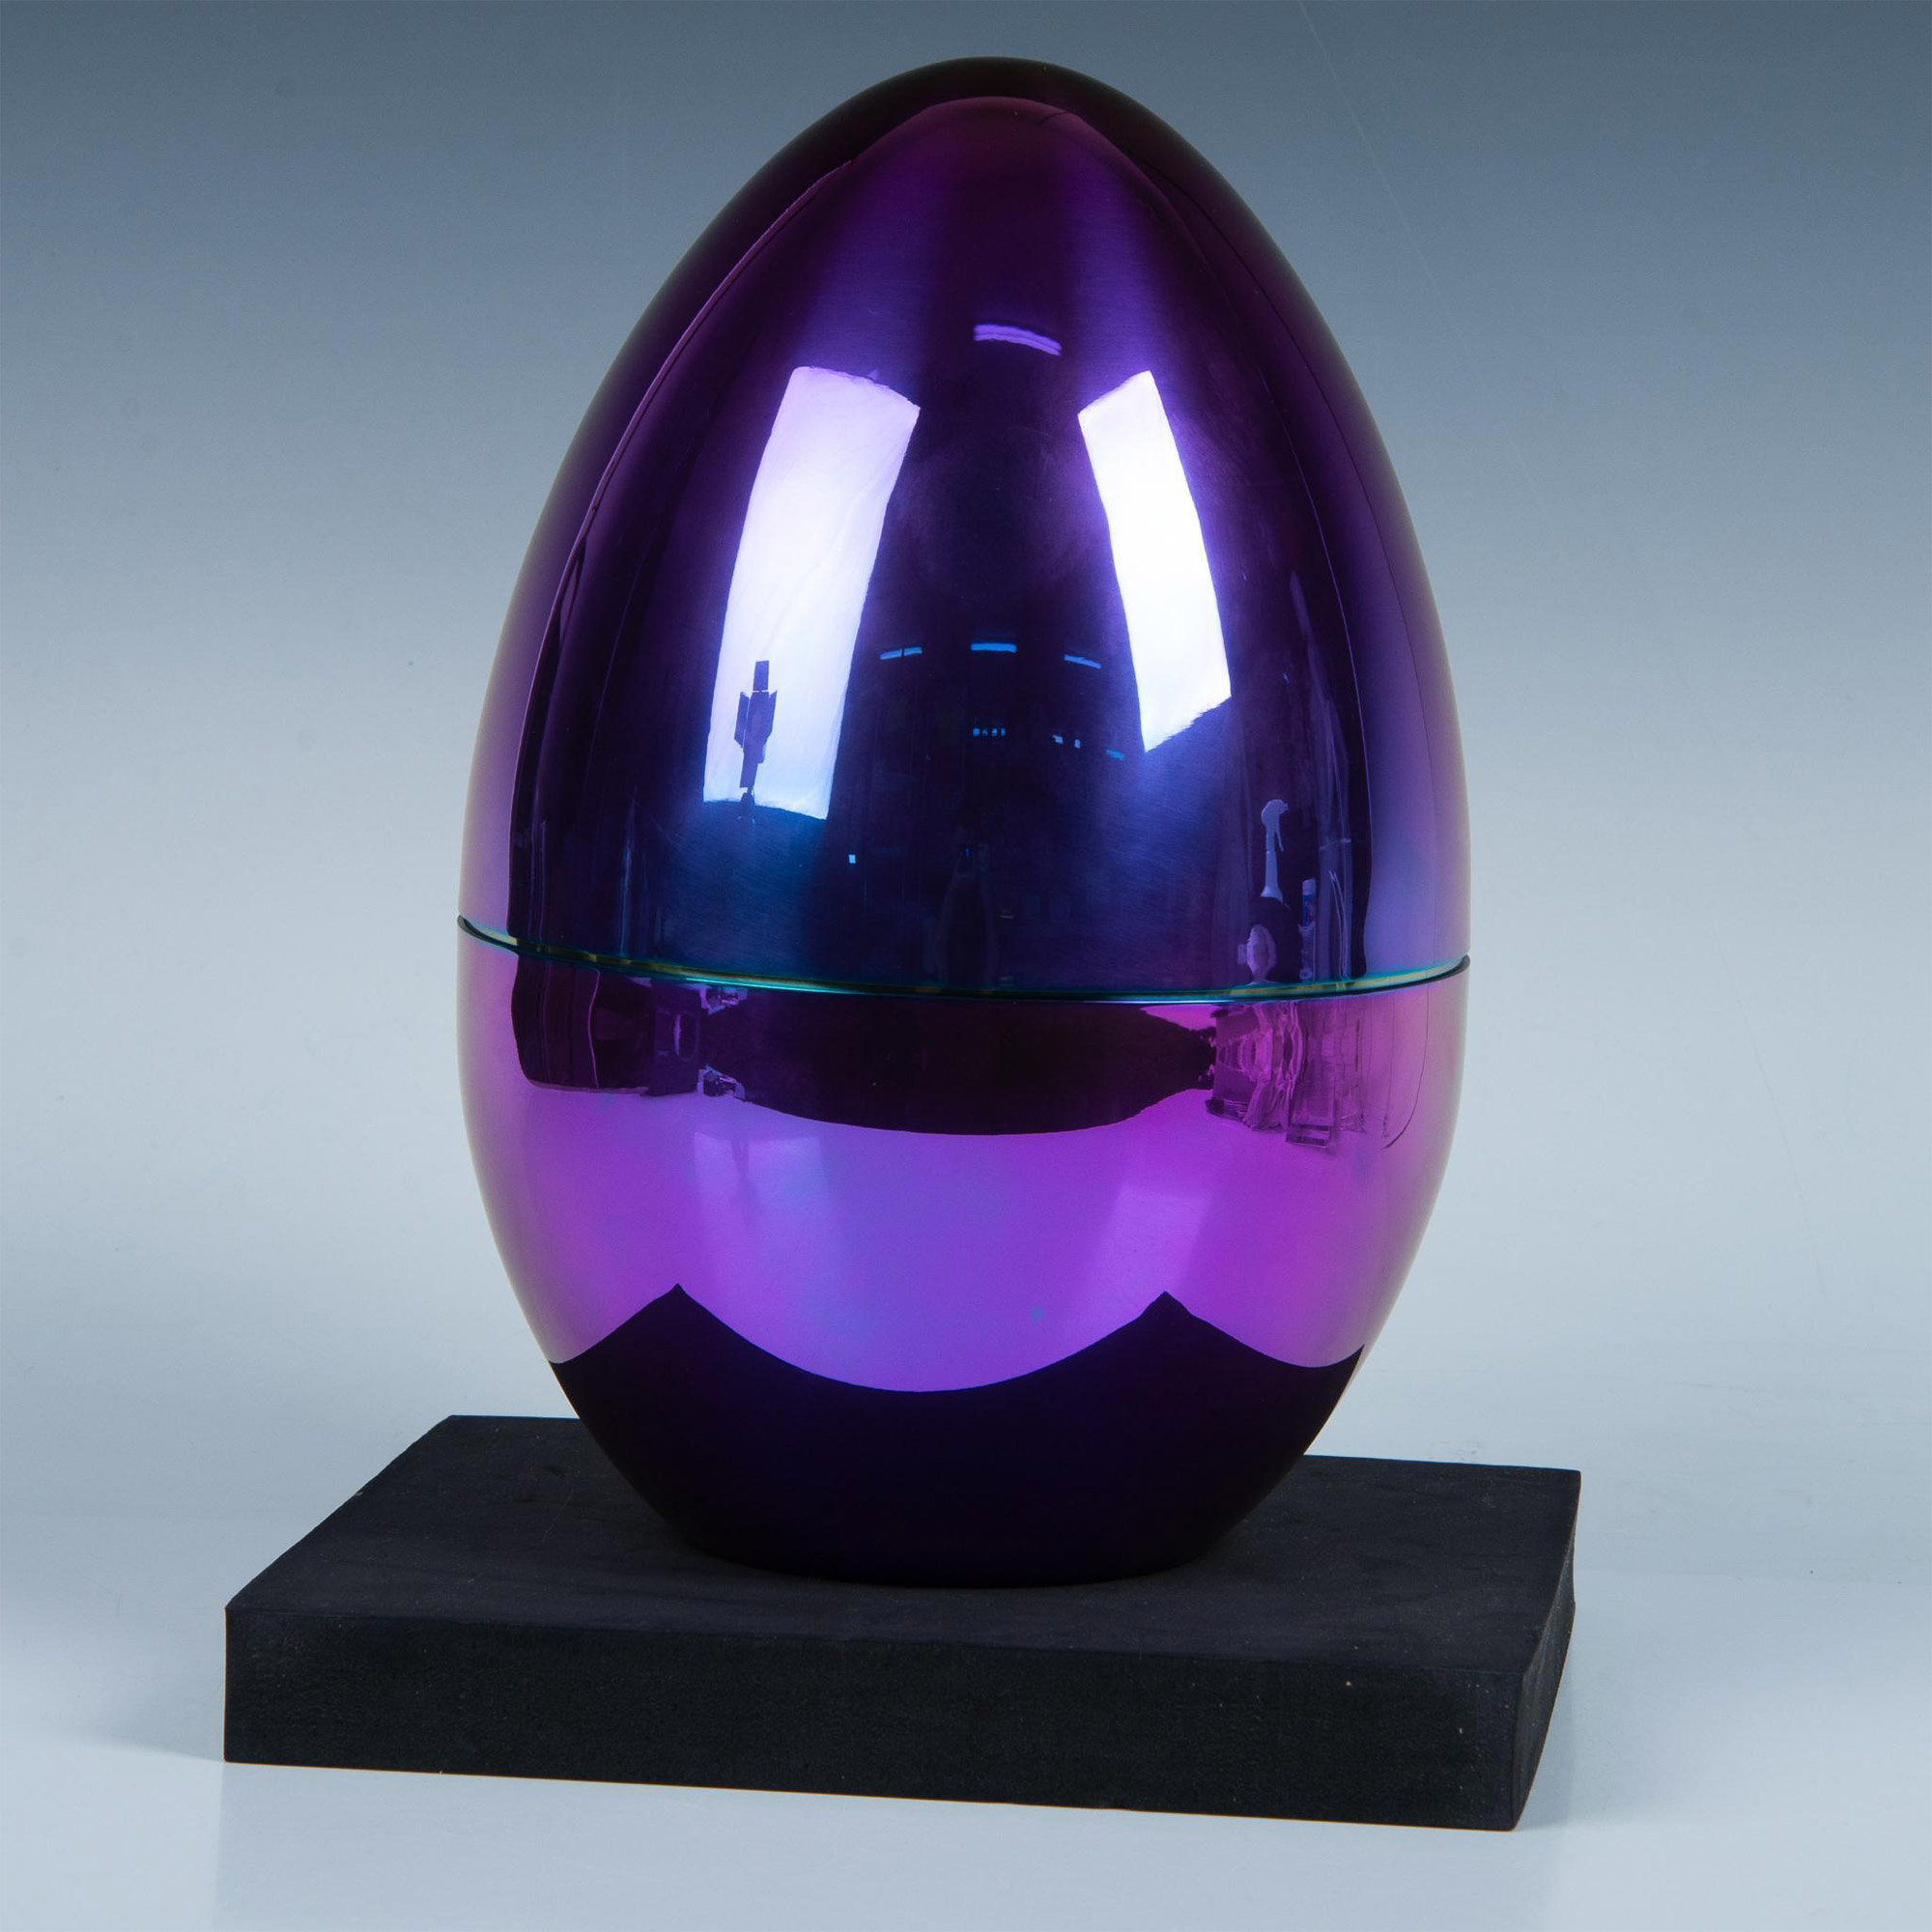 25pc Flatware Set with Decorative Iridescent Egg Case - Image 3 of 8